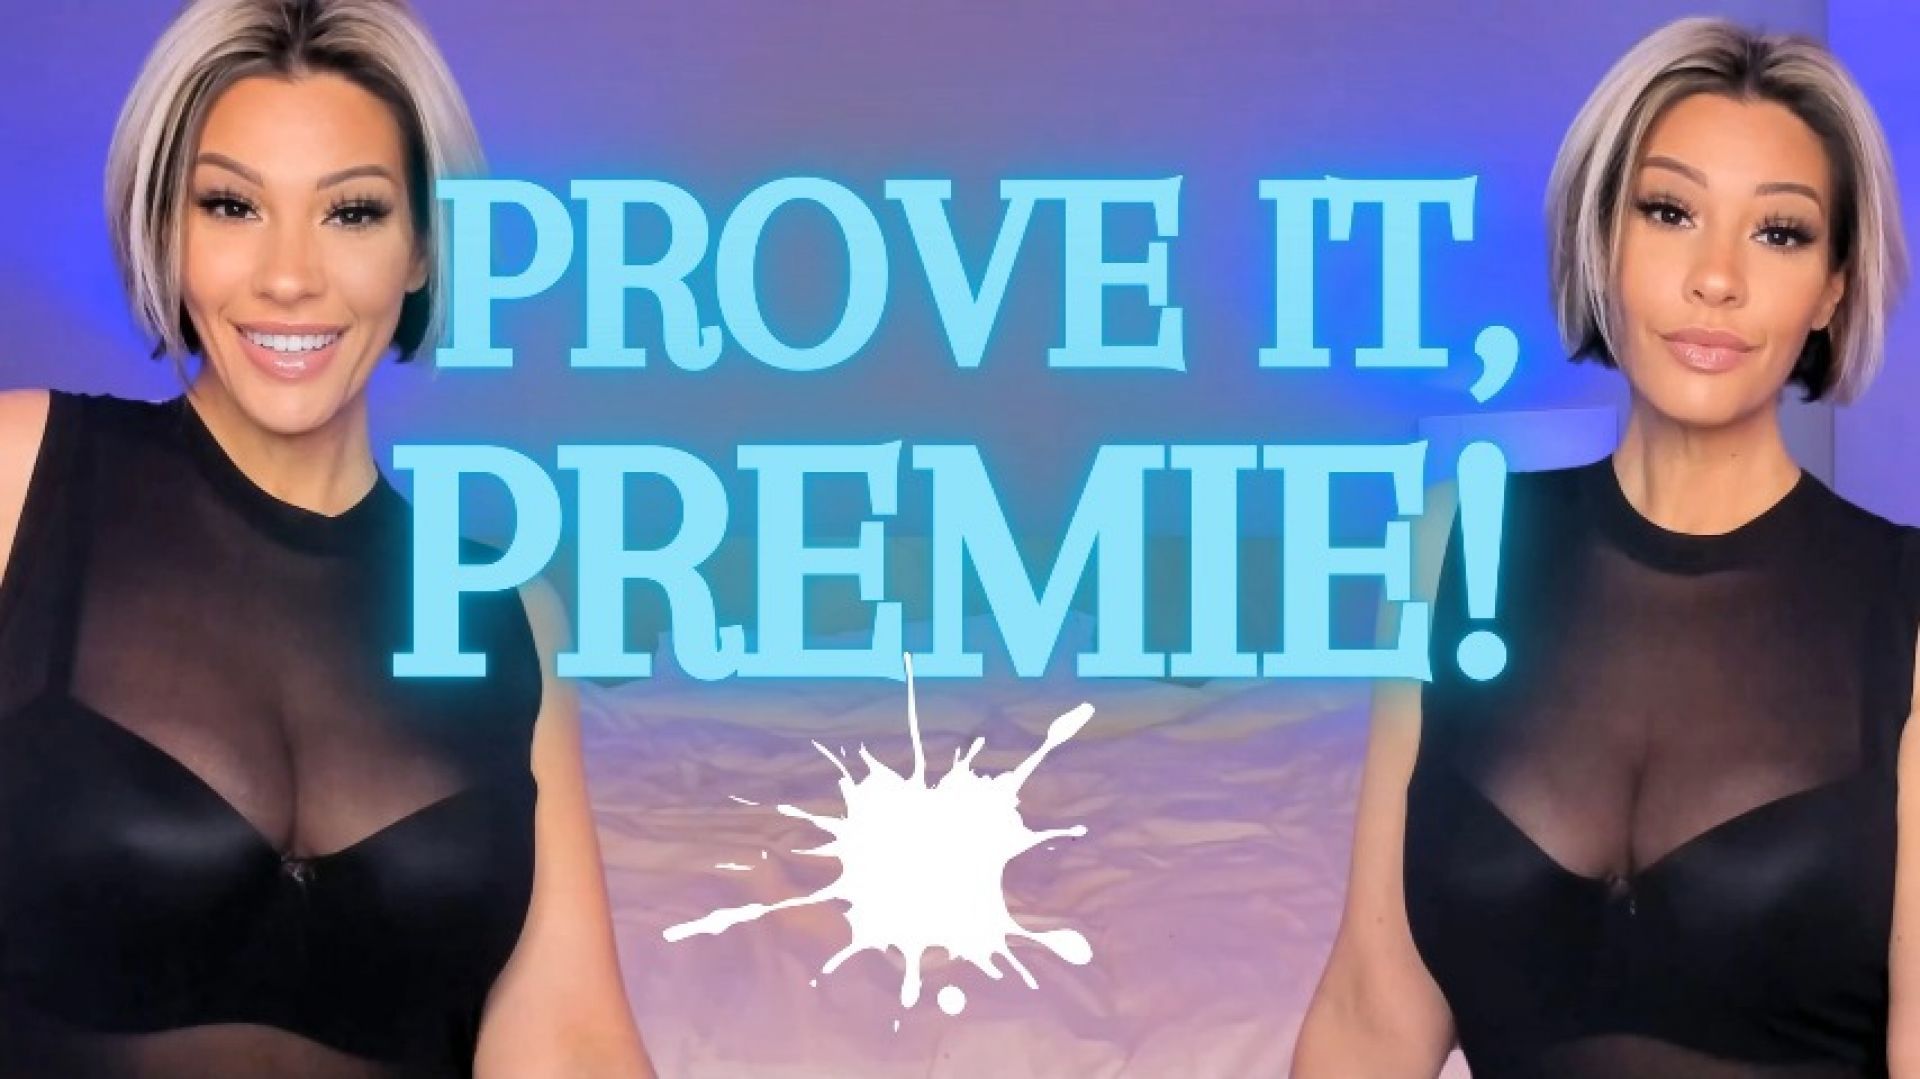 Prove It, Premie